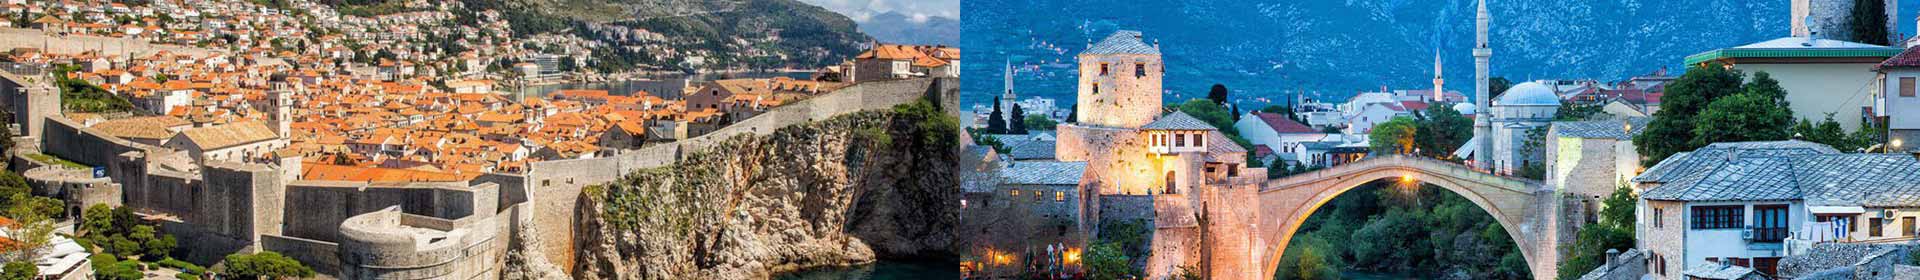 An image representing Split - Dubrovnik via Mostar & Sarajevo tour